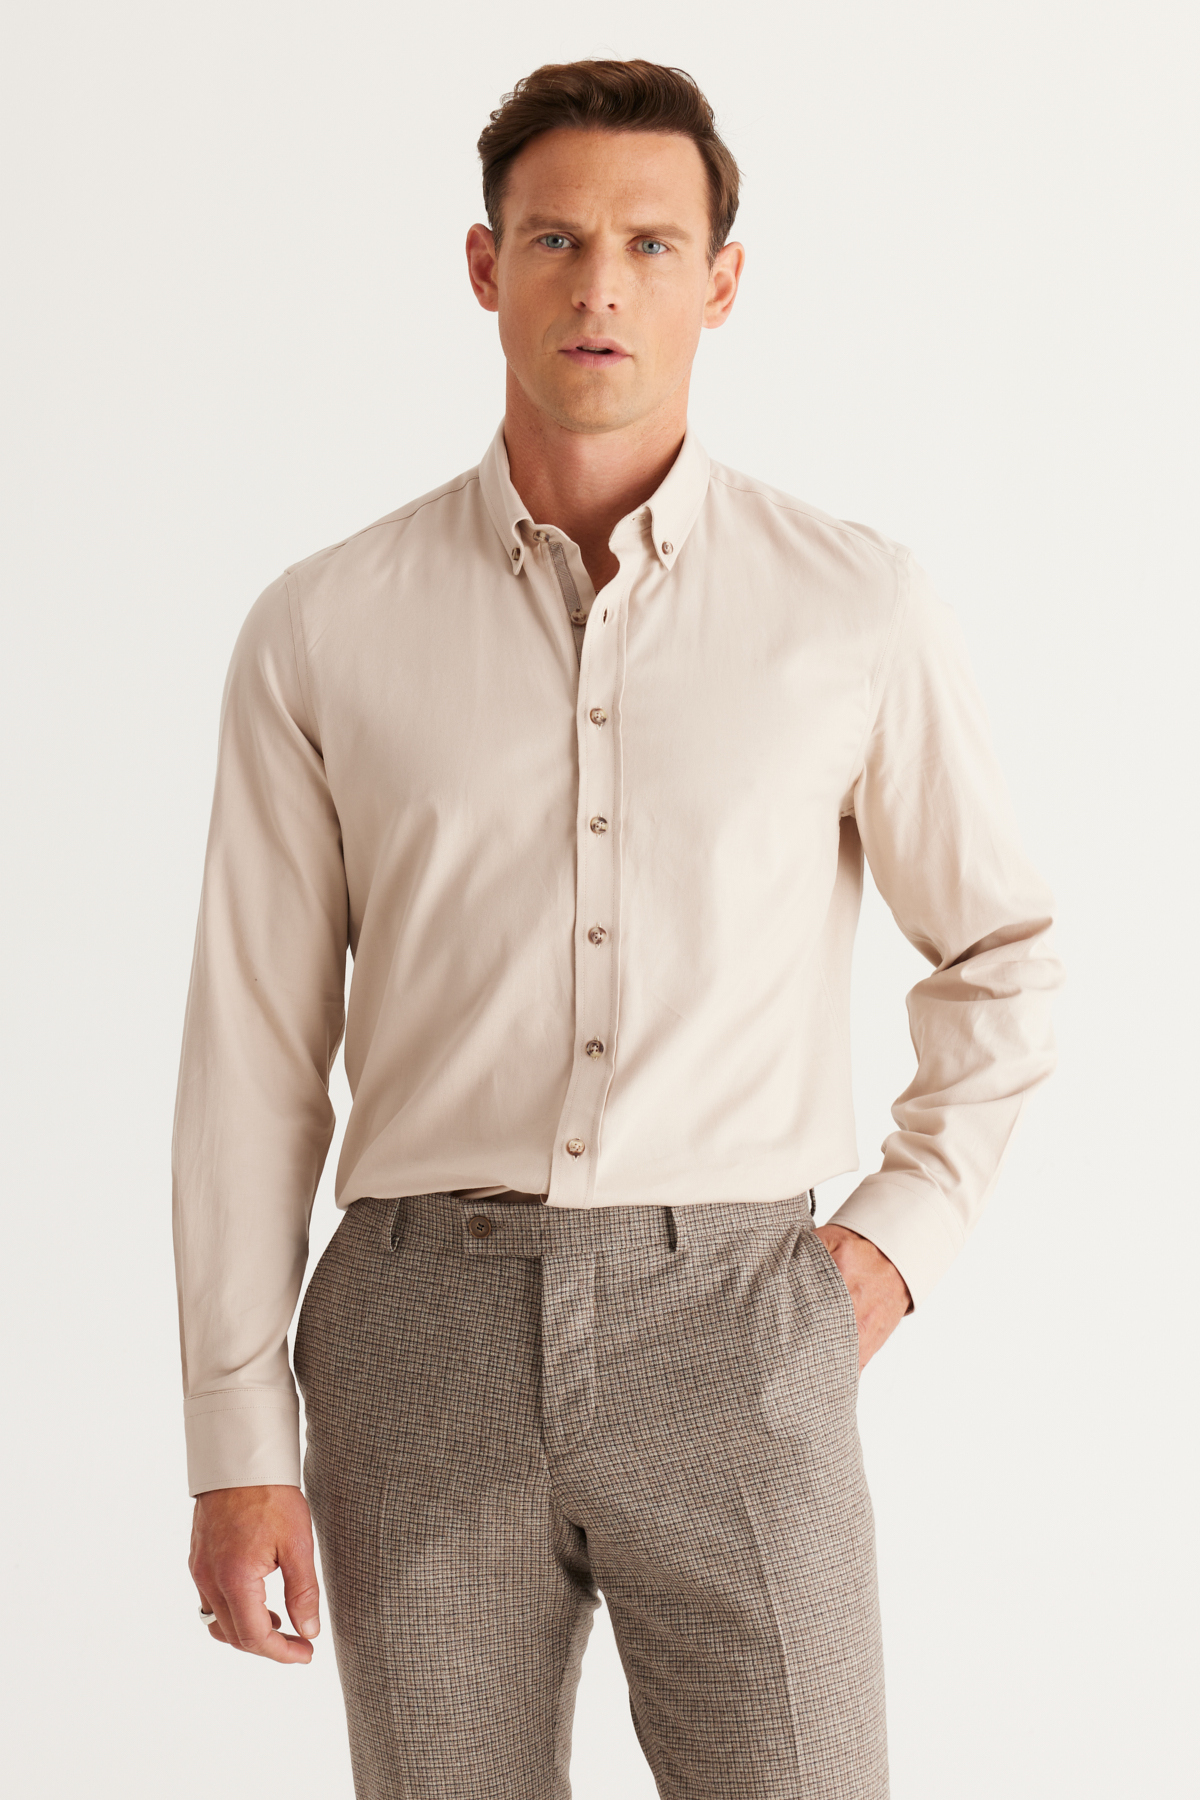 ALTINYILDIZ CLASSICS Men's Beige Slim Fit Slim Fit Shirt with Buttons and Collar Cotton Gabardine